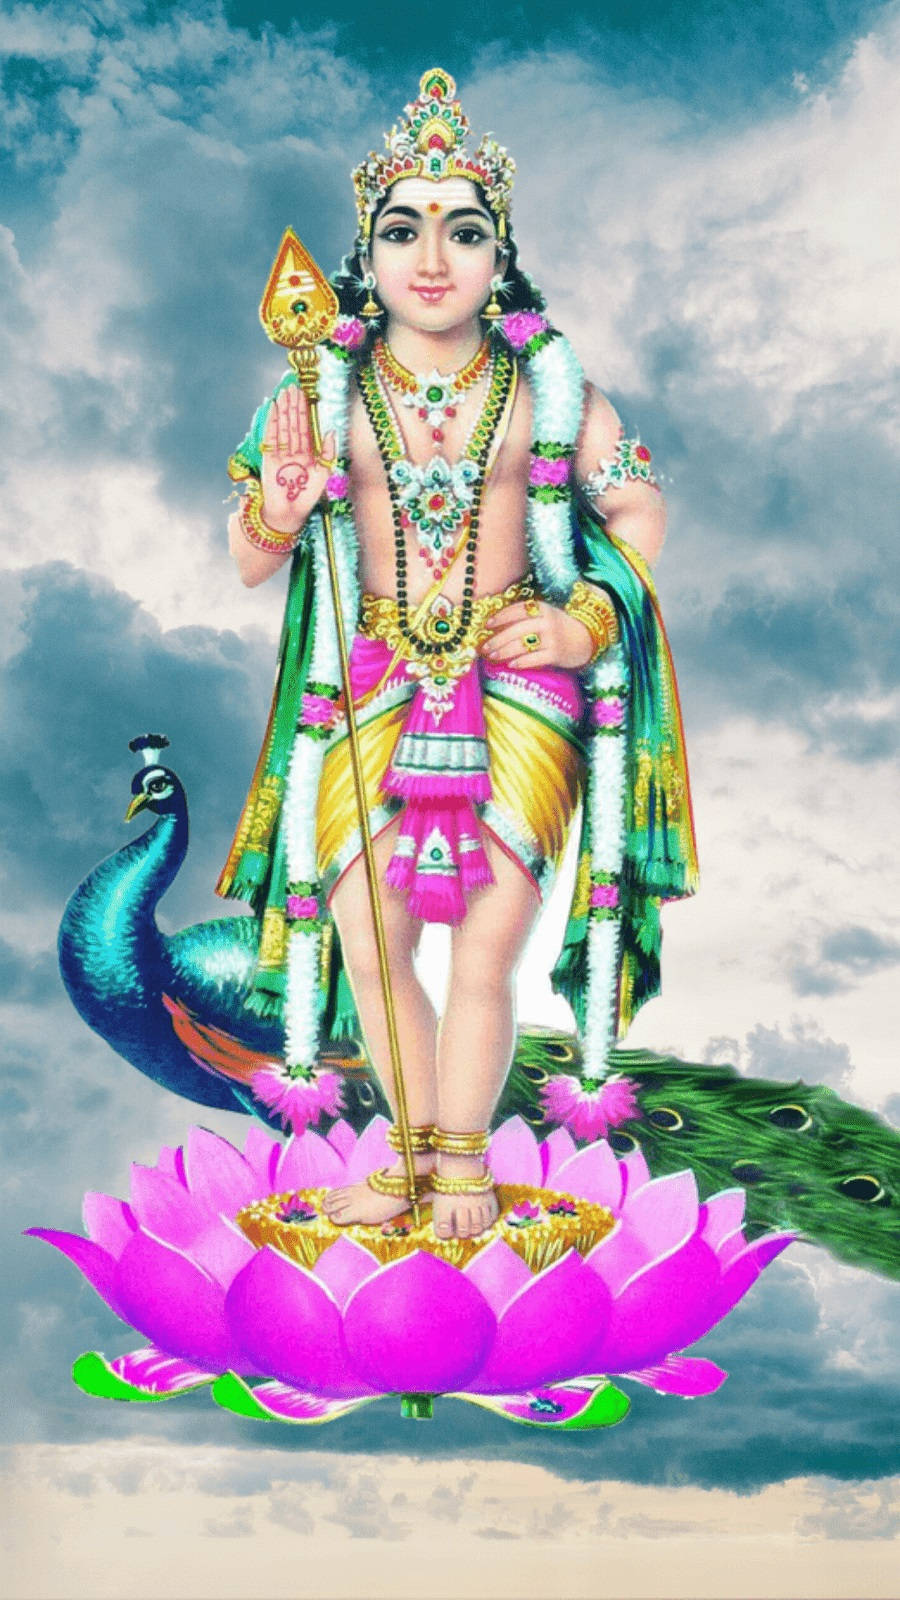 Murugan Standing On Lotus